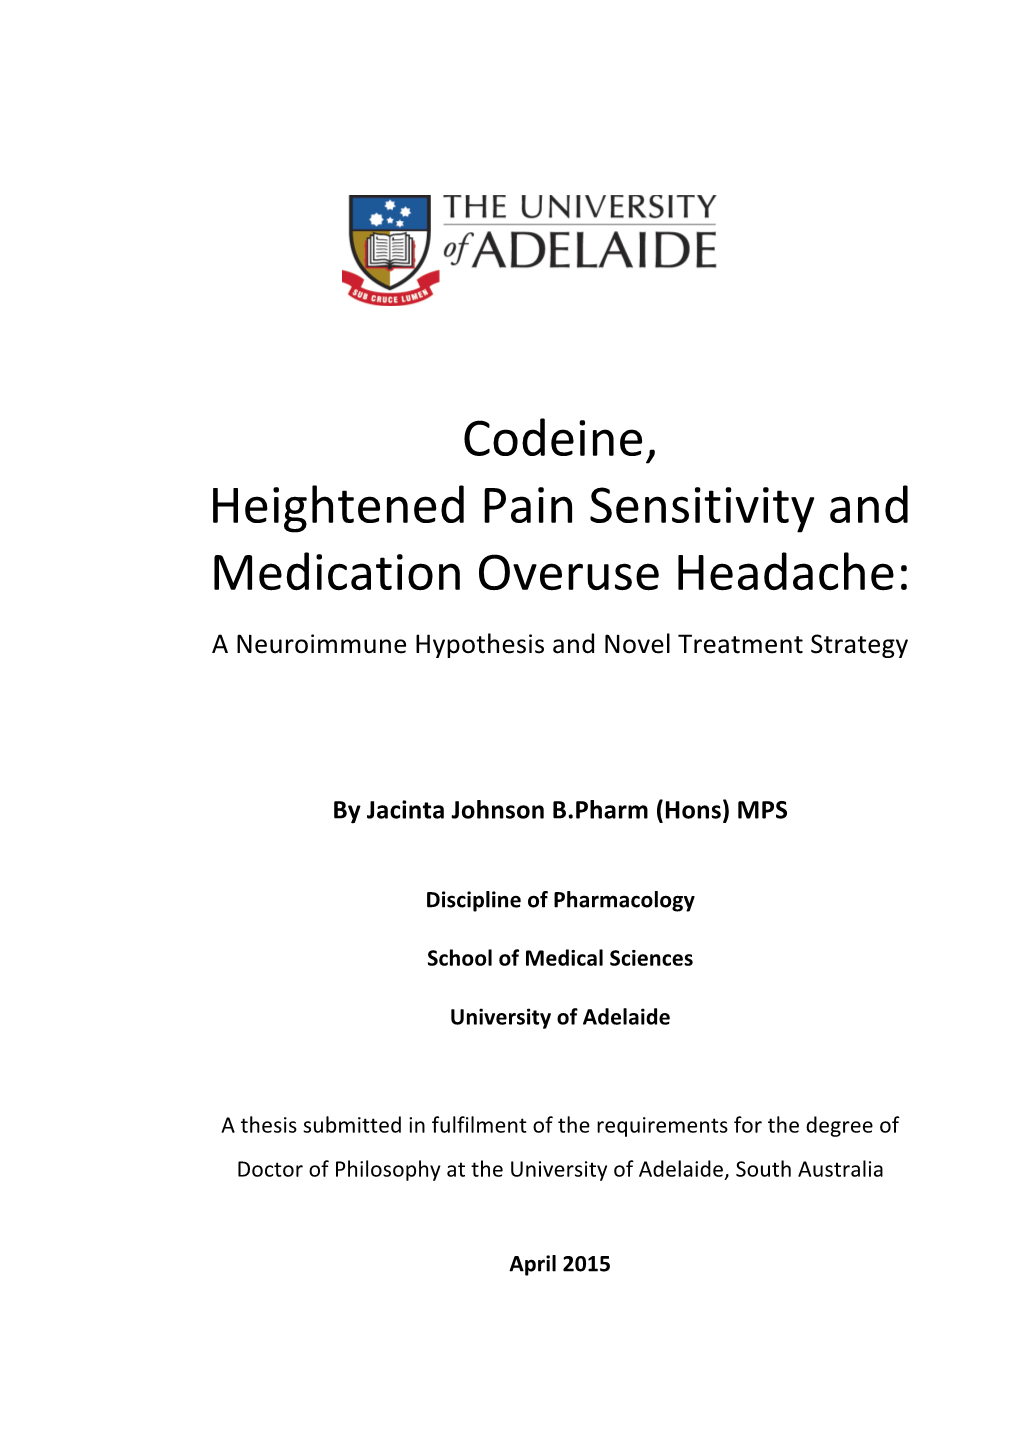 Codeine, Heightened Pain Sensitivity and Medication Overuse Headache